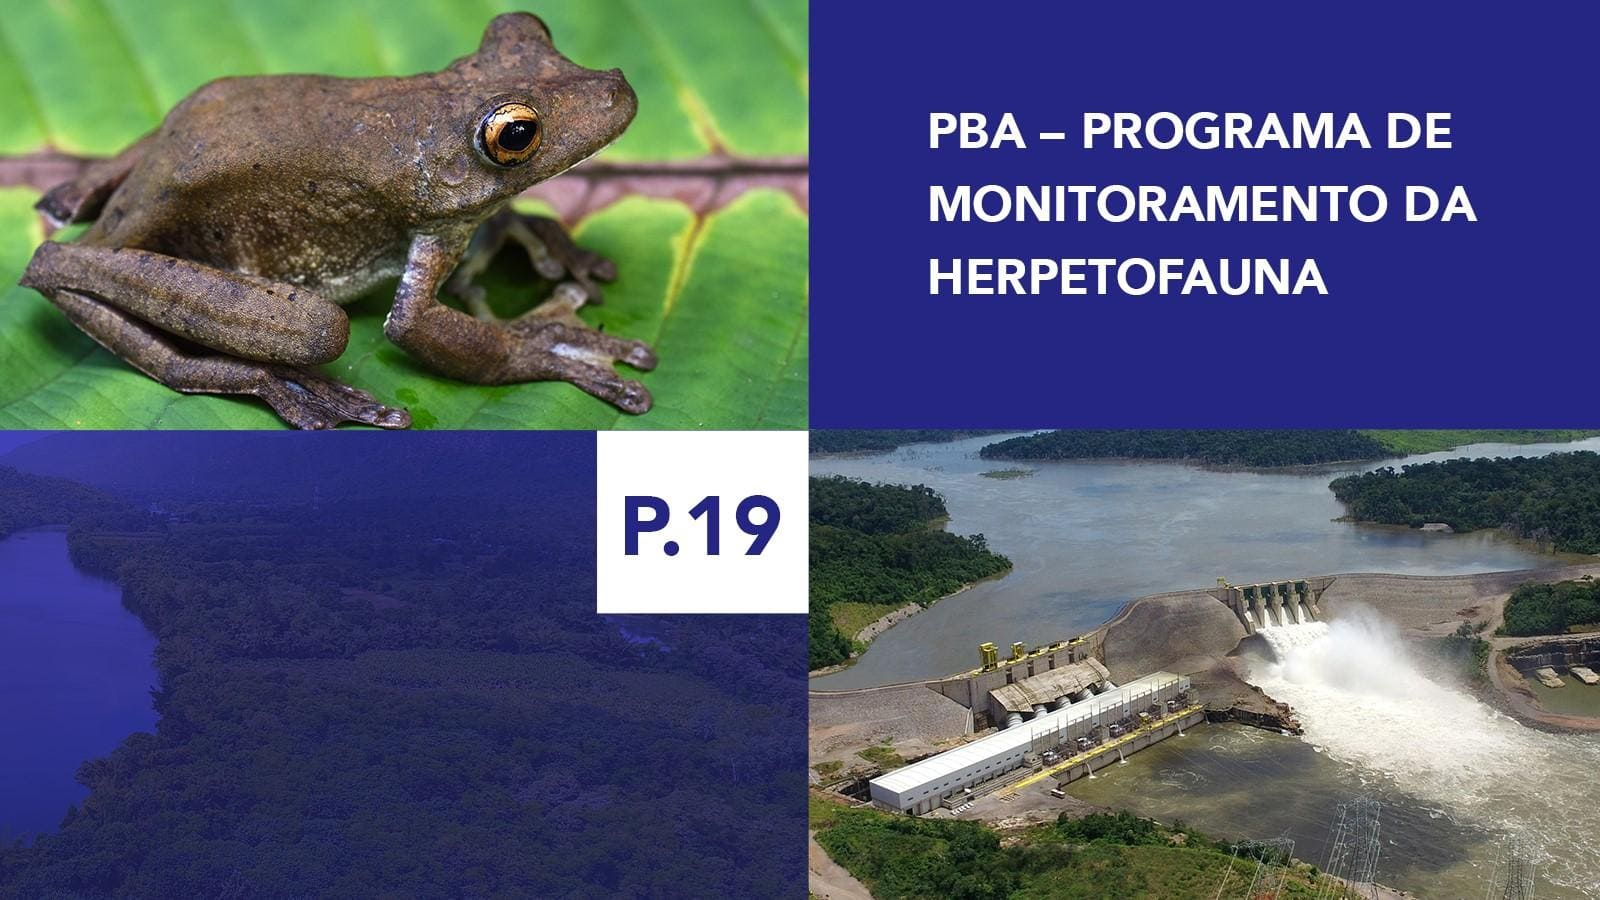 P.19 - Programa de Monitoramento da Herpetofauna